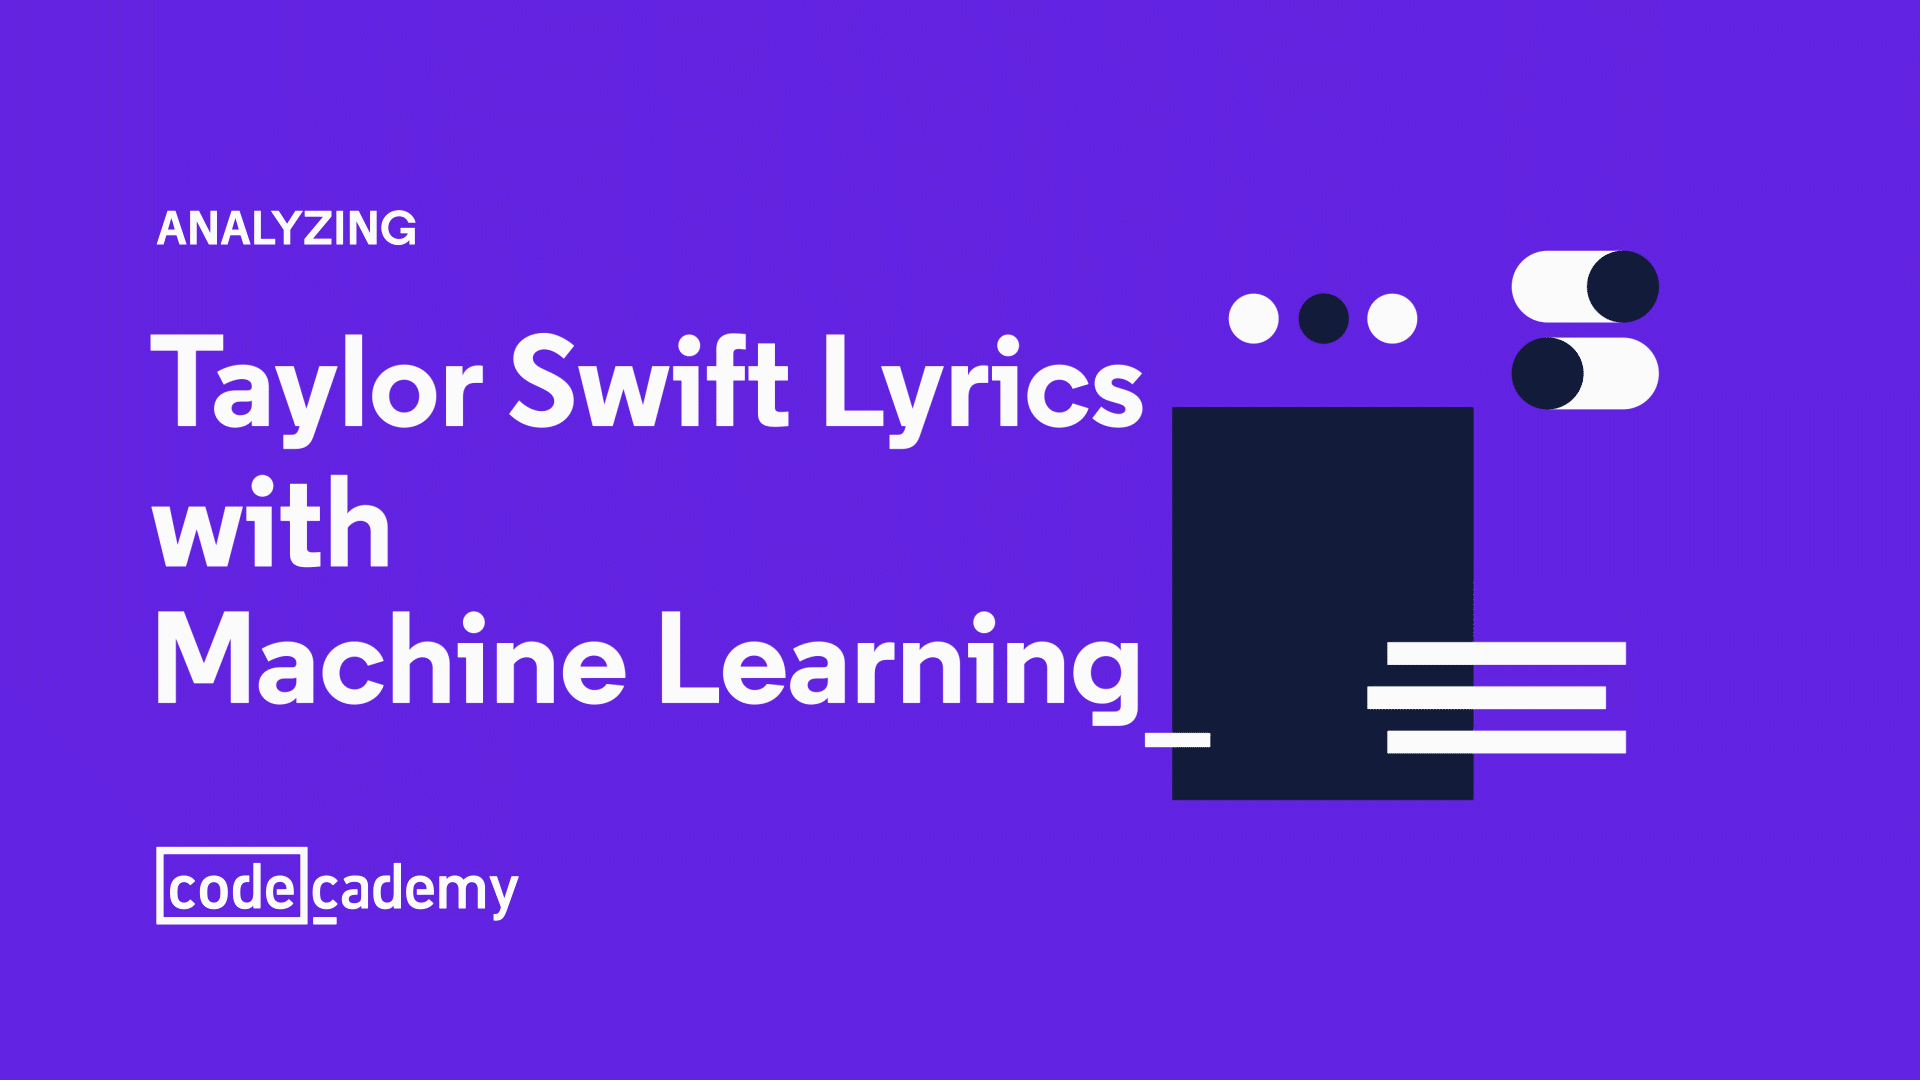 Using Machine Learning to Analyze Taylor Swift's Lyrics